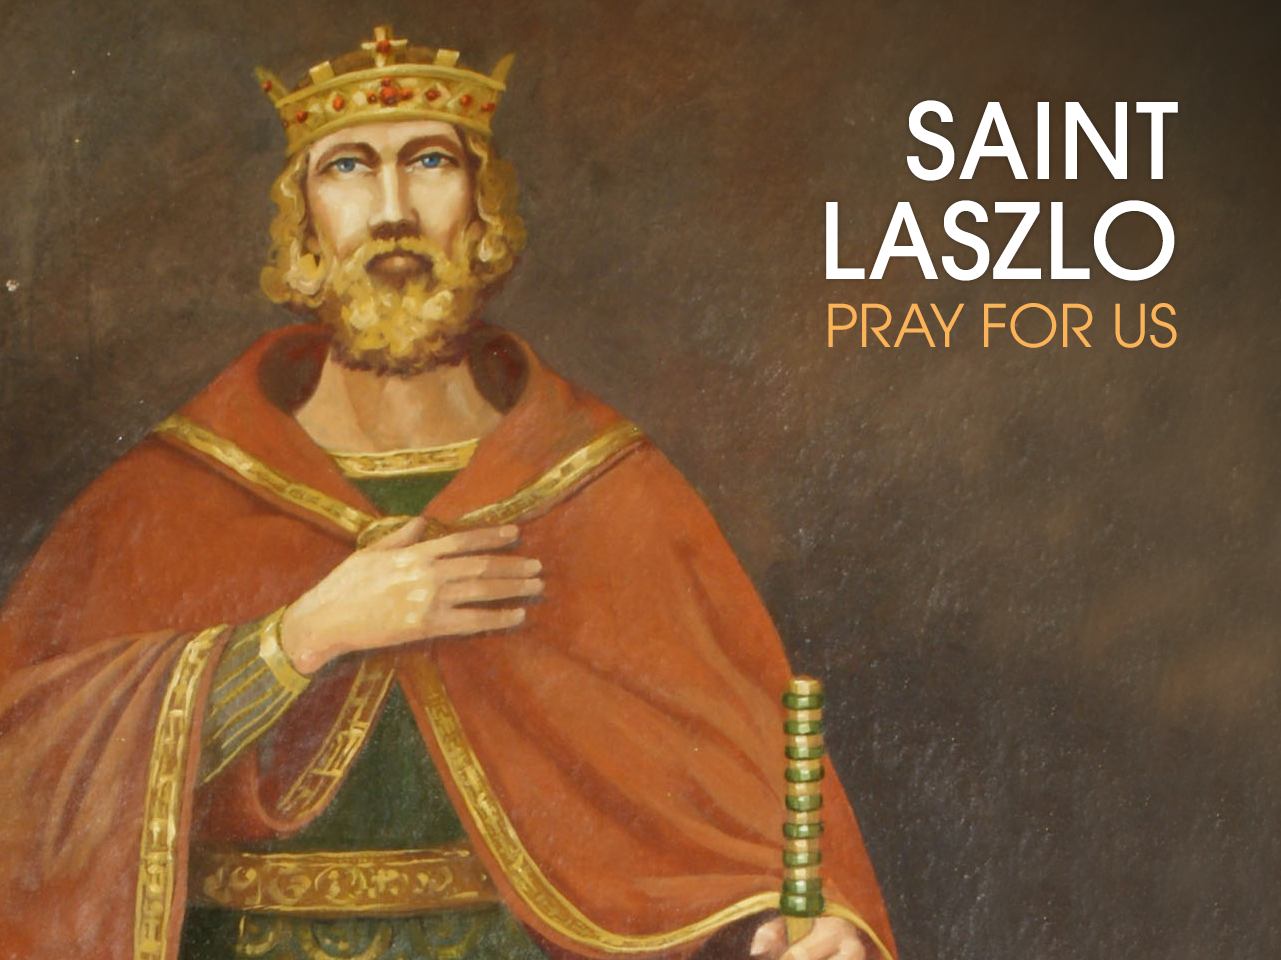 St. Laszlo